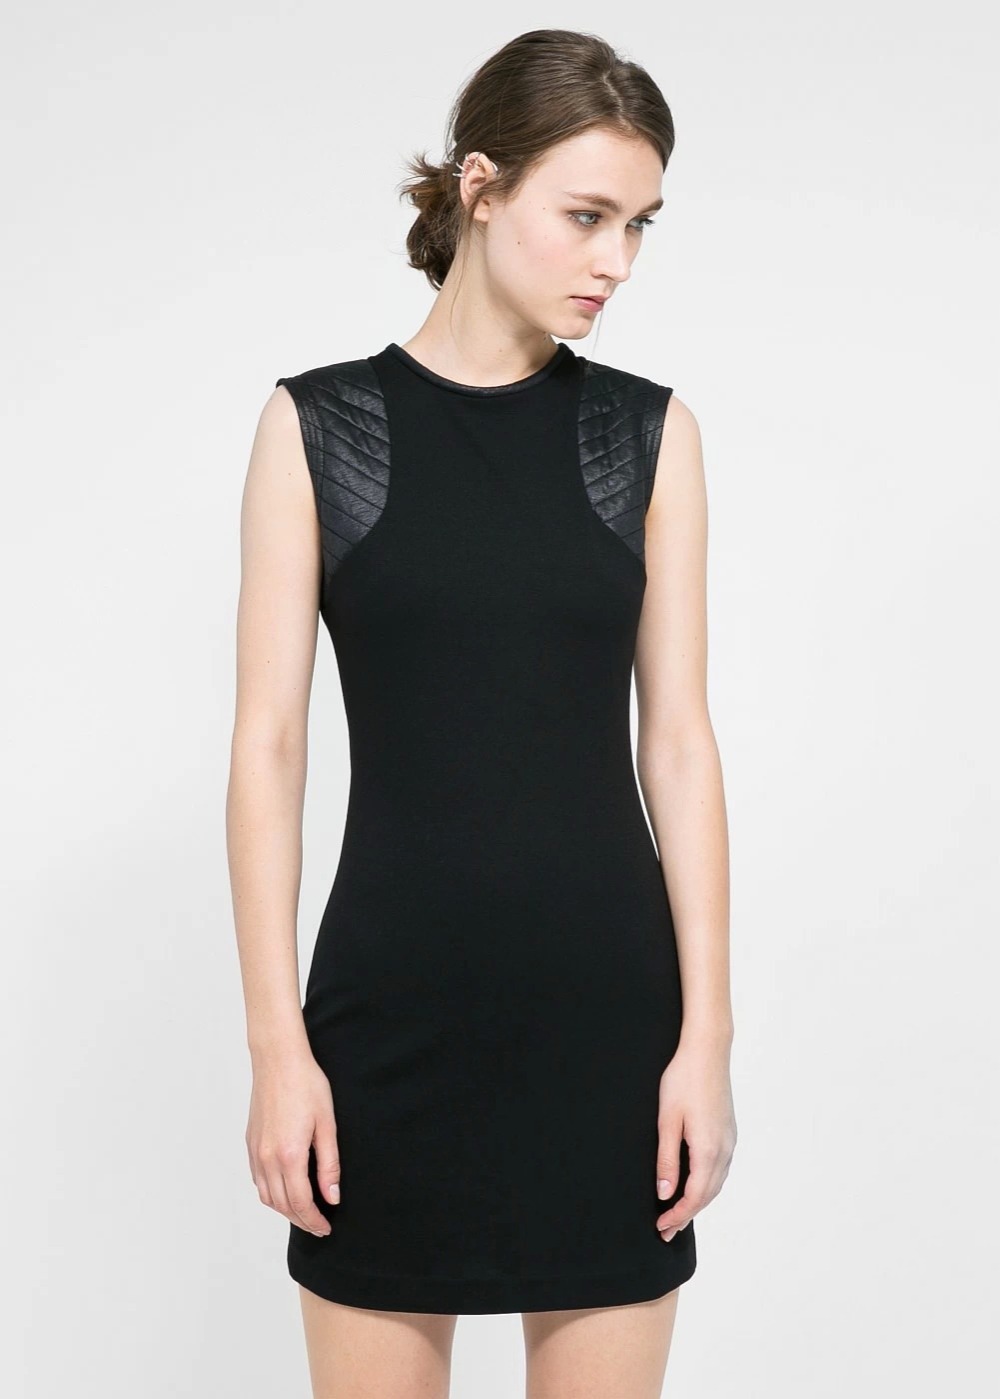 Fashion women vintage elegant zipper black Dress sexy sleeveless o neck causal slim brand dress  04LJ52